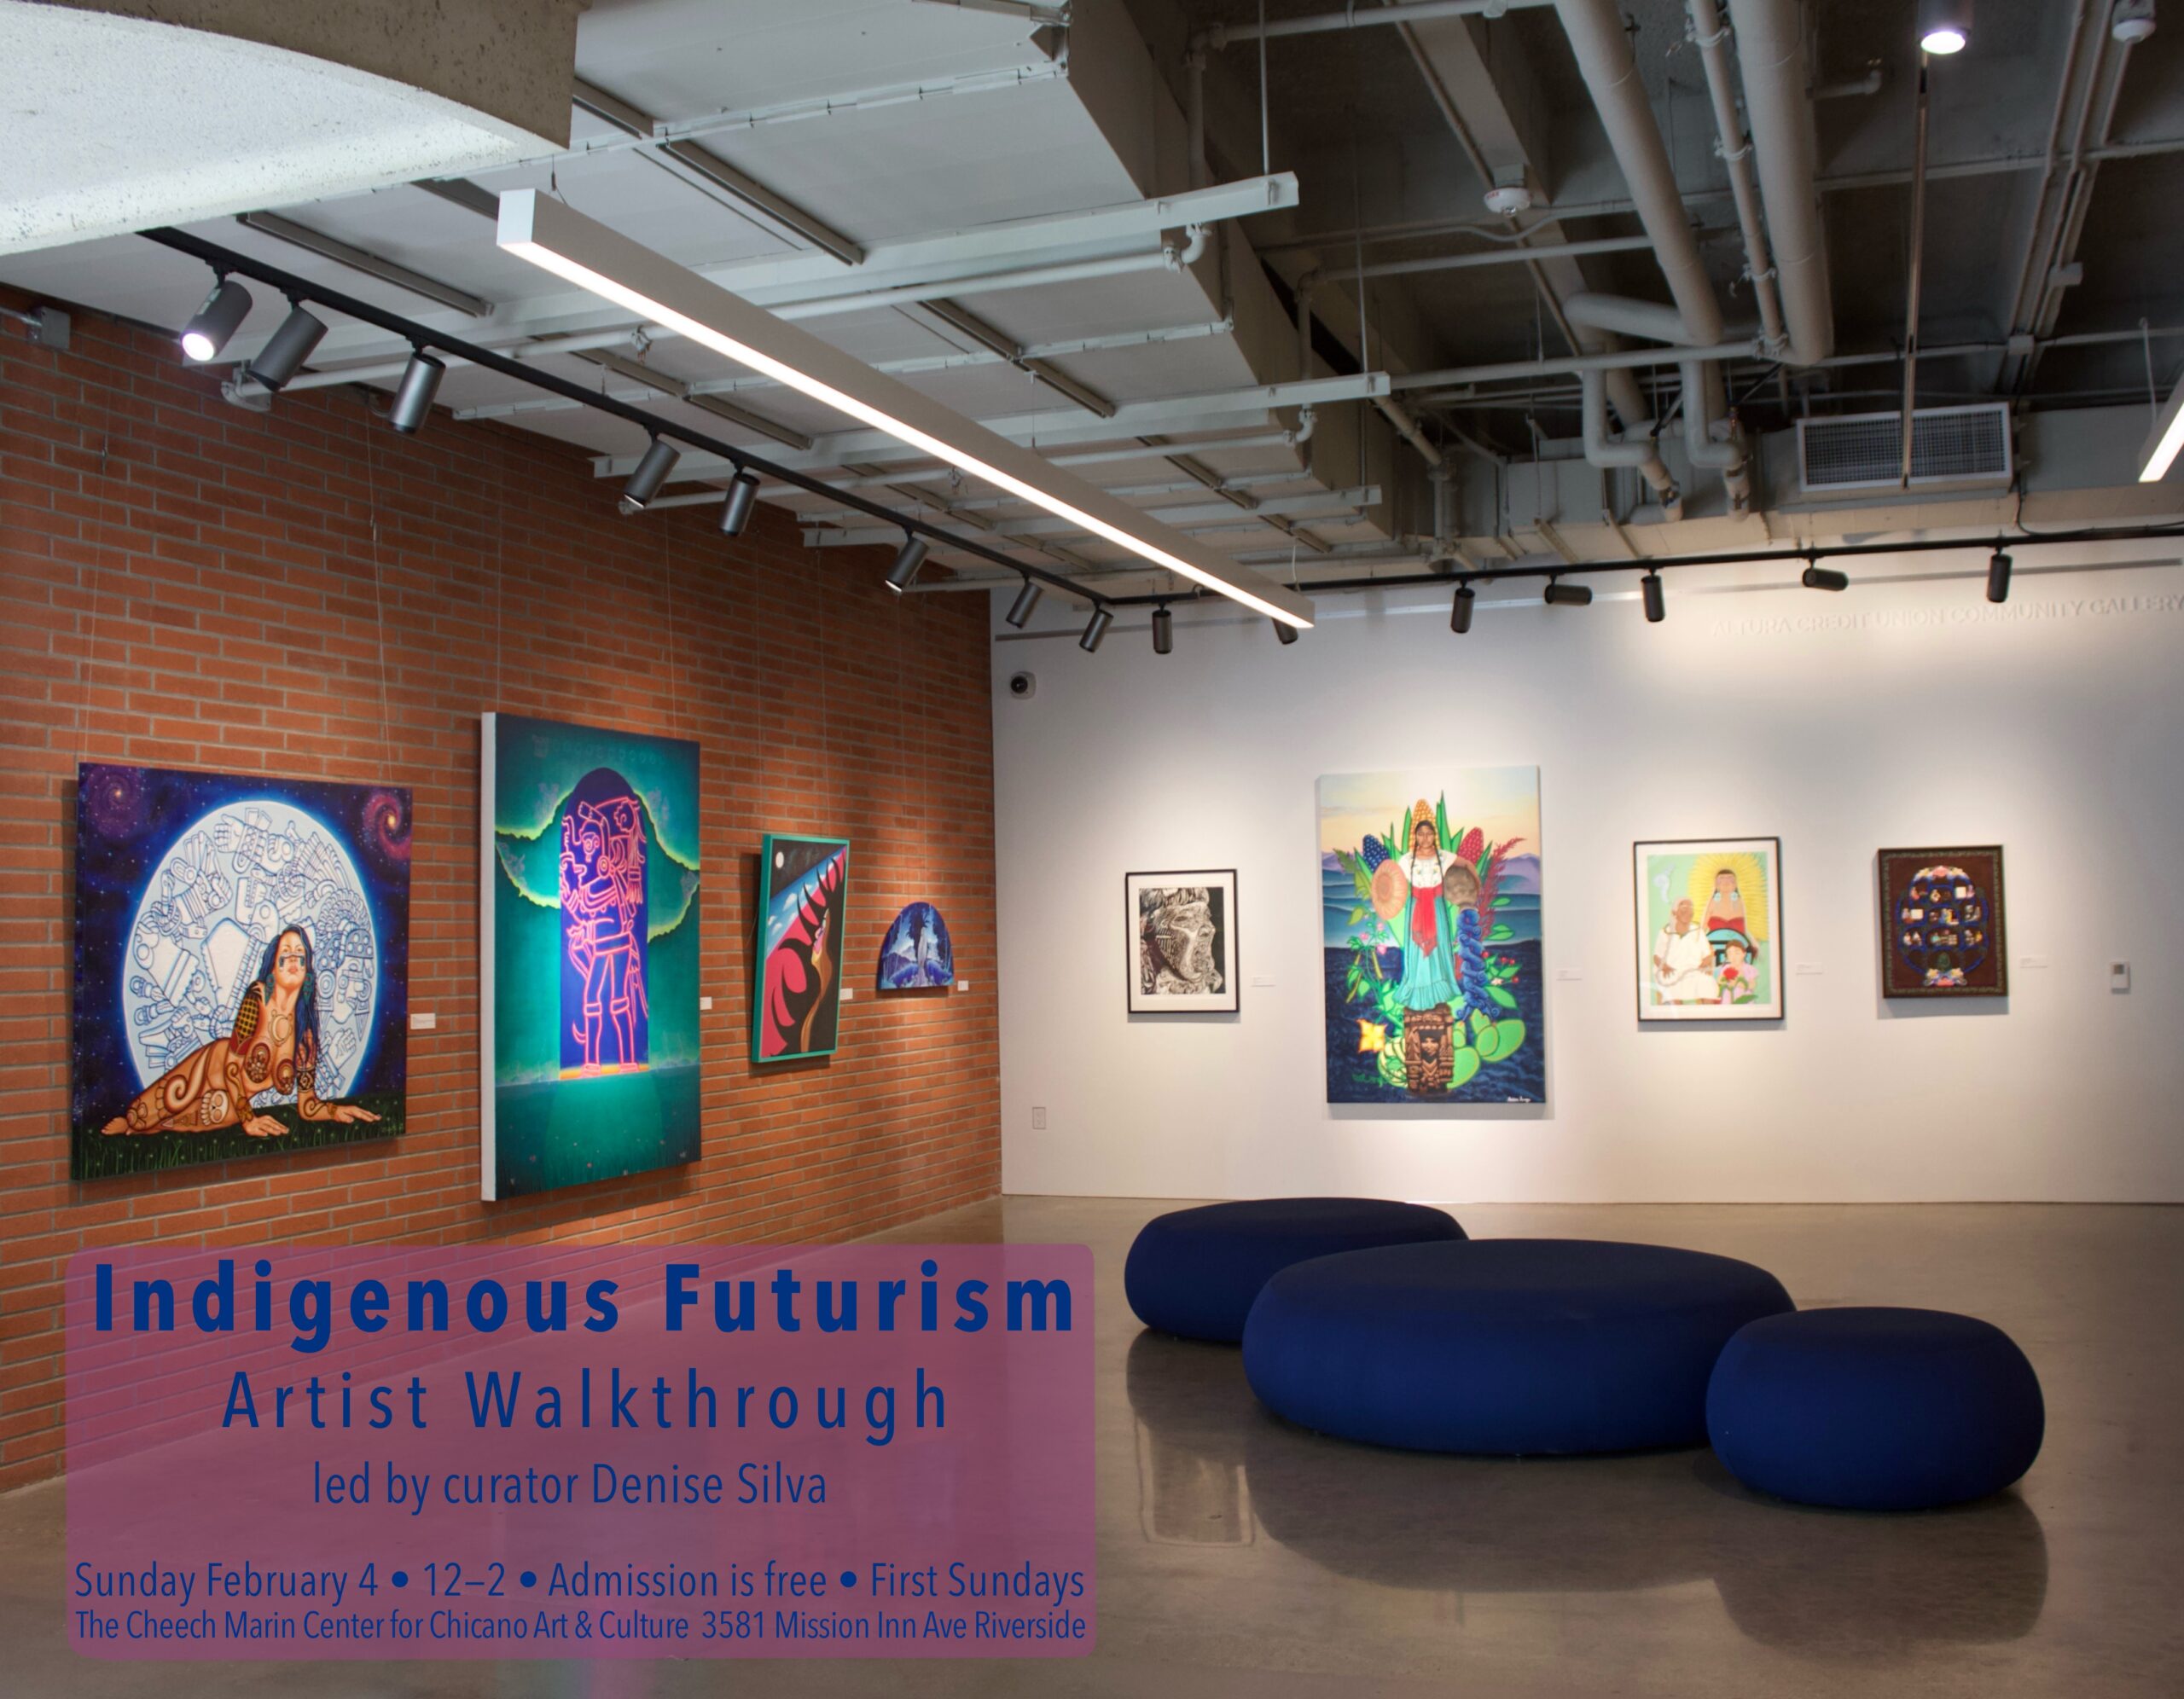 FREE Artist walk-through led by Indigenous Futurism curator Denise Silva + Maya codex workshop with artist Stephanie Godoy